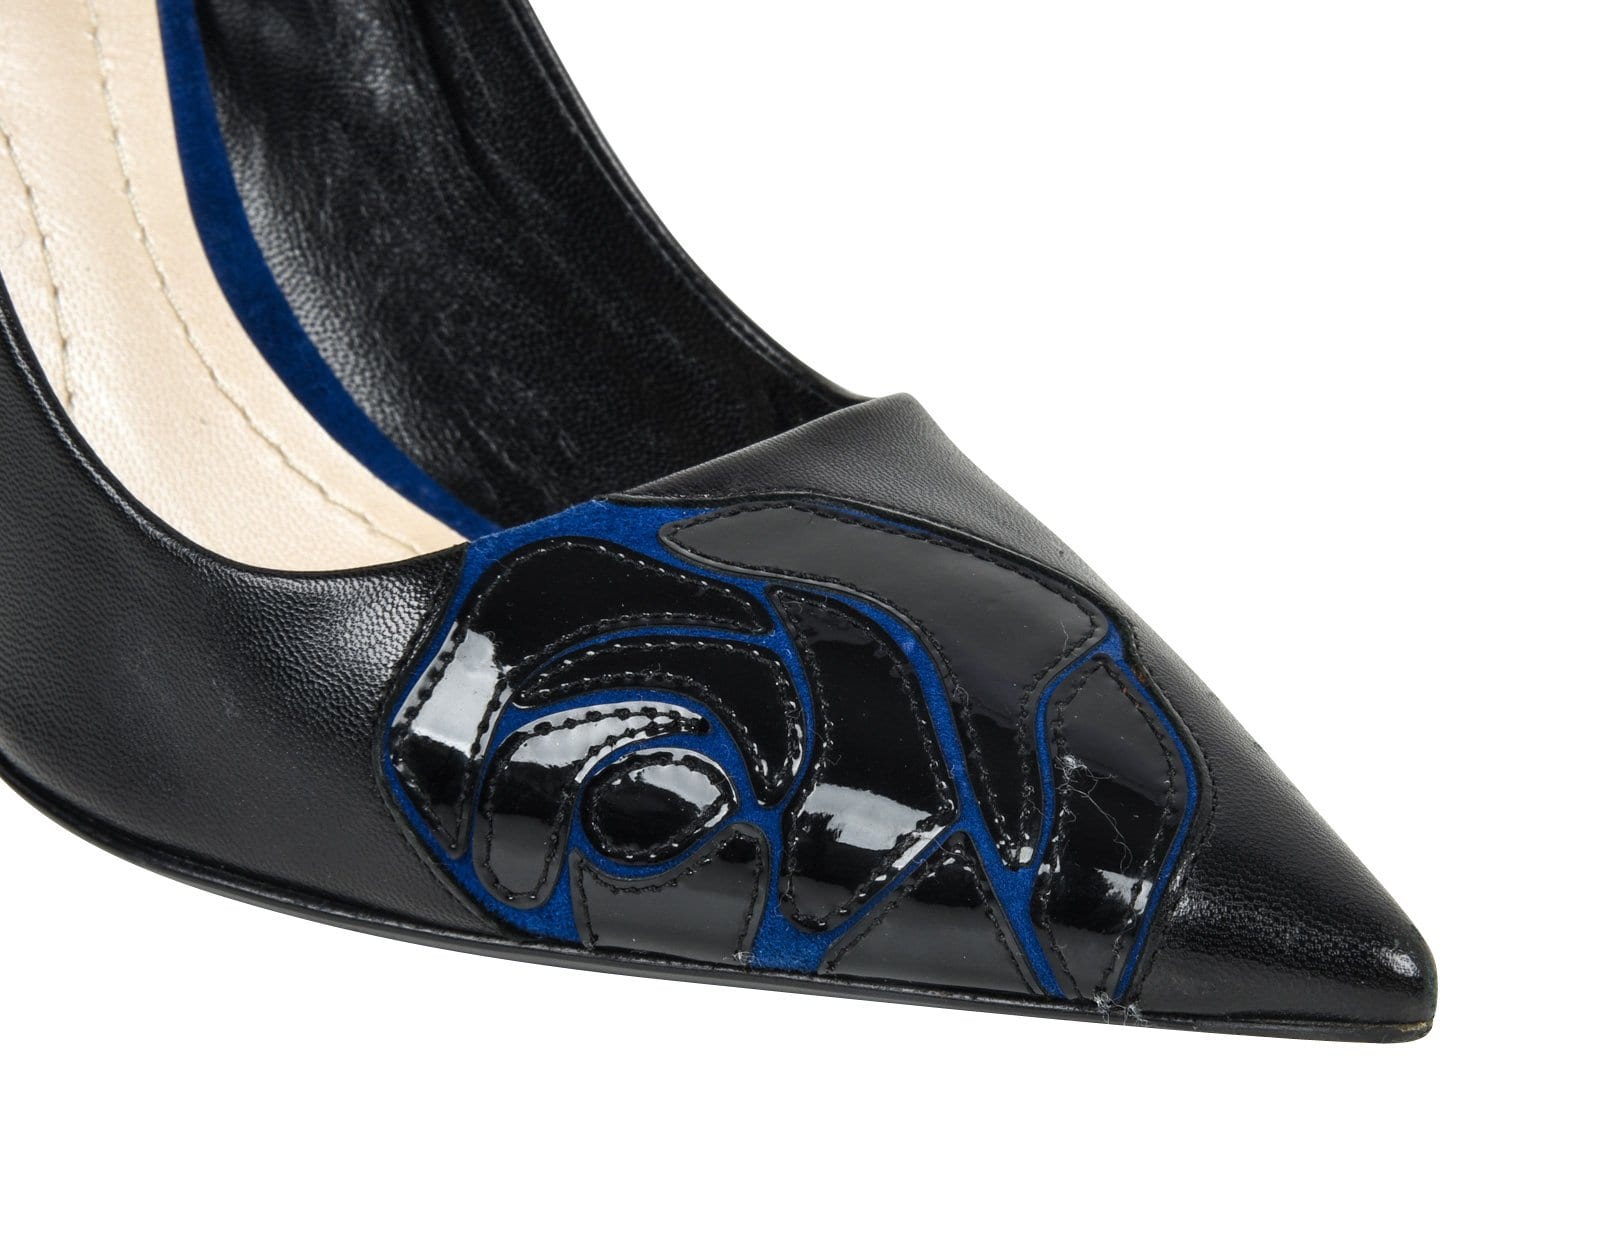 Christian Dior Shoe Black Pump Rose Applique Detail 39.5 / 9.5 - mightychic